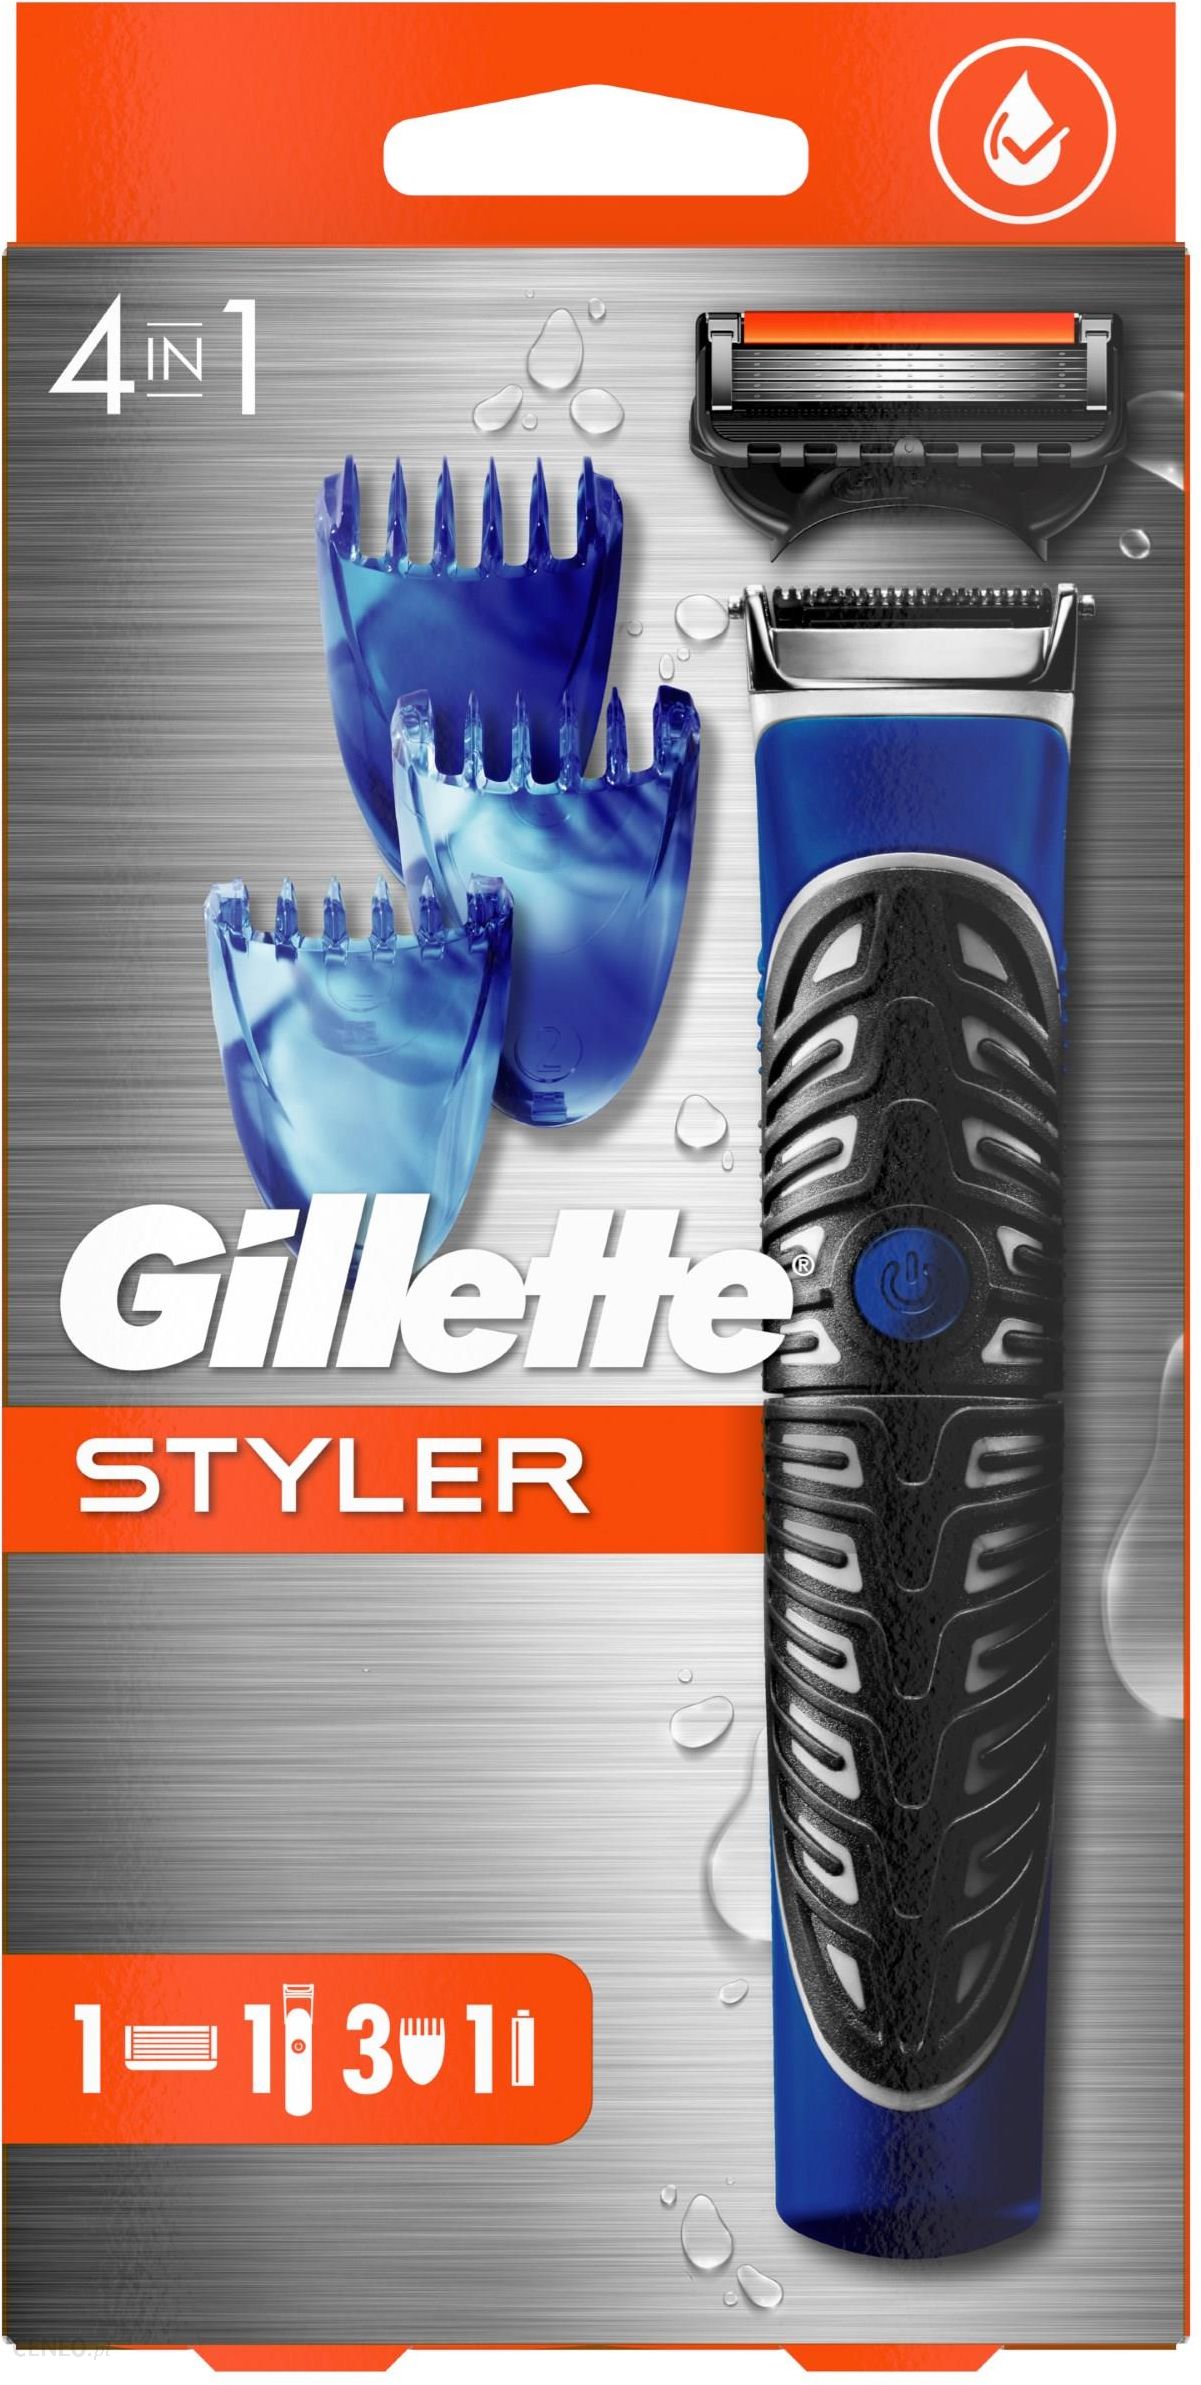 Gillette Fusion ProGlide Styler maszynka do golenia